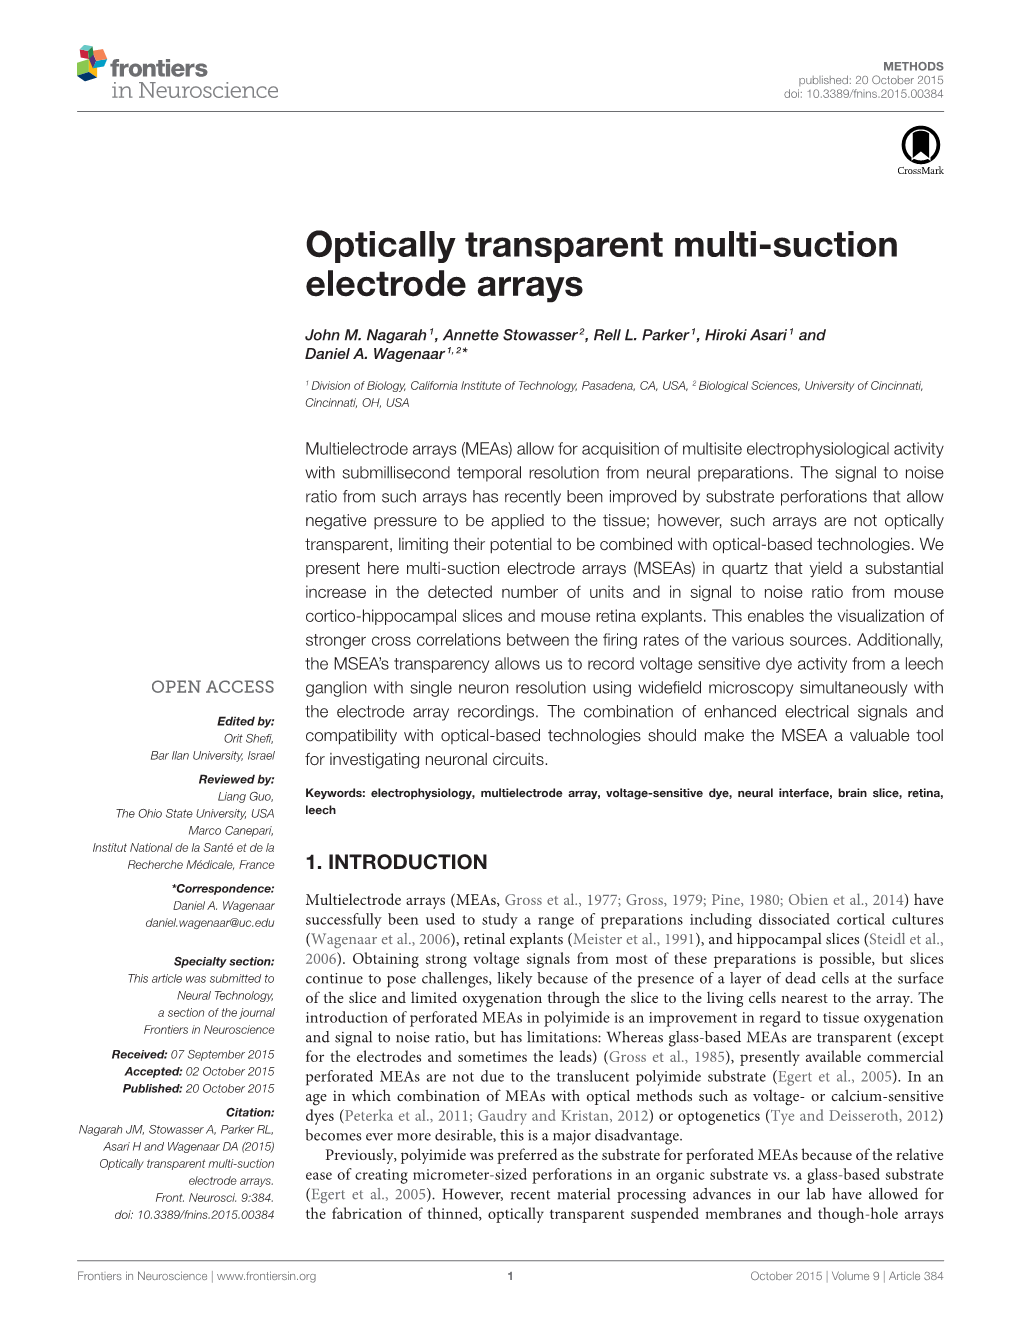 Optically Transparent Multi-Suction Electrode Arrays